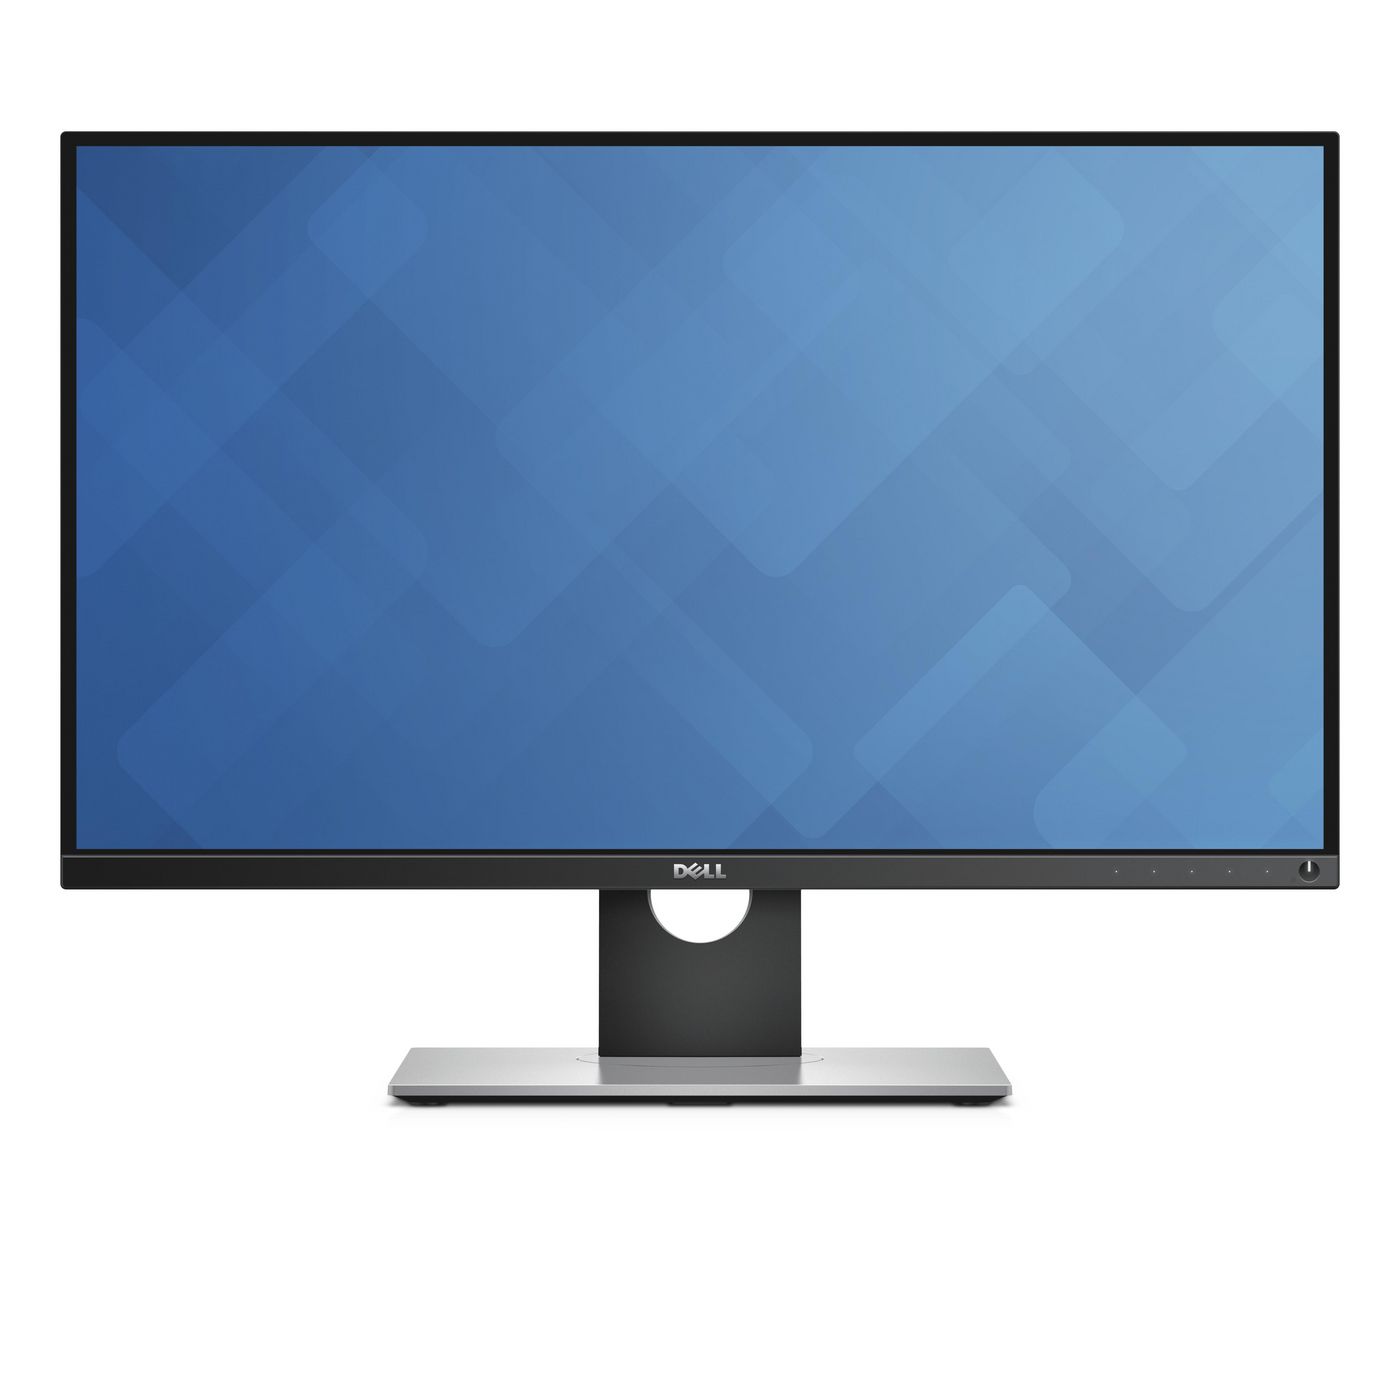 Desktop Monitor - Up2716d Ultrasharp - 27in - 2560x1440 (wqhd) - Black